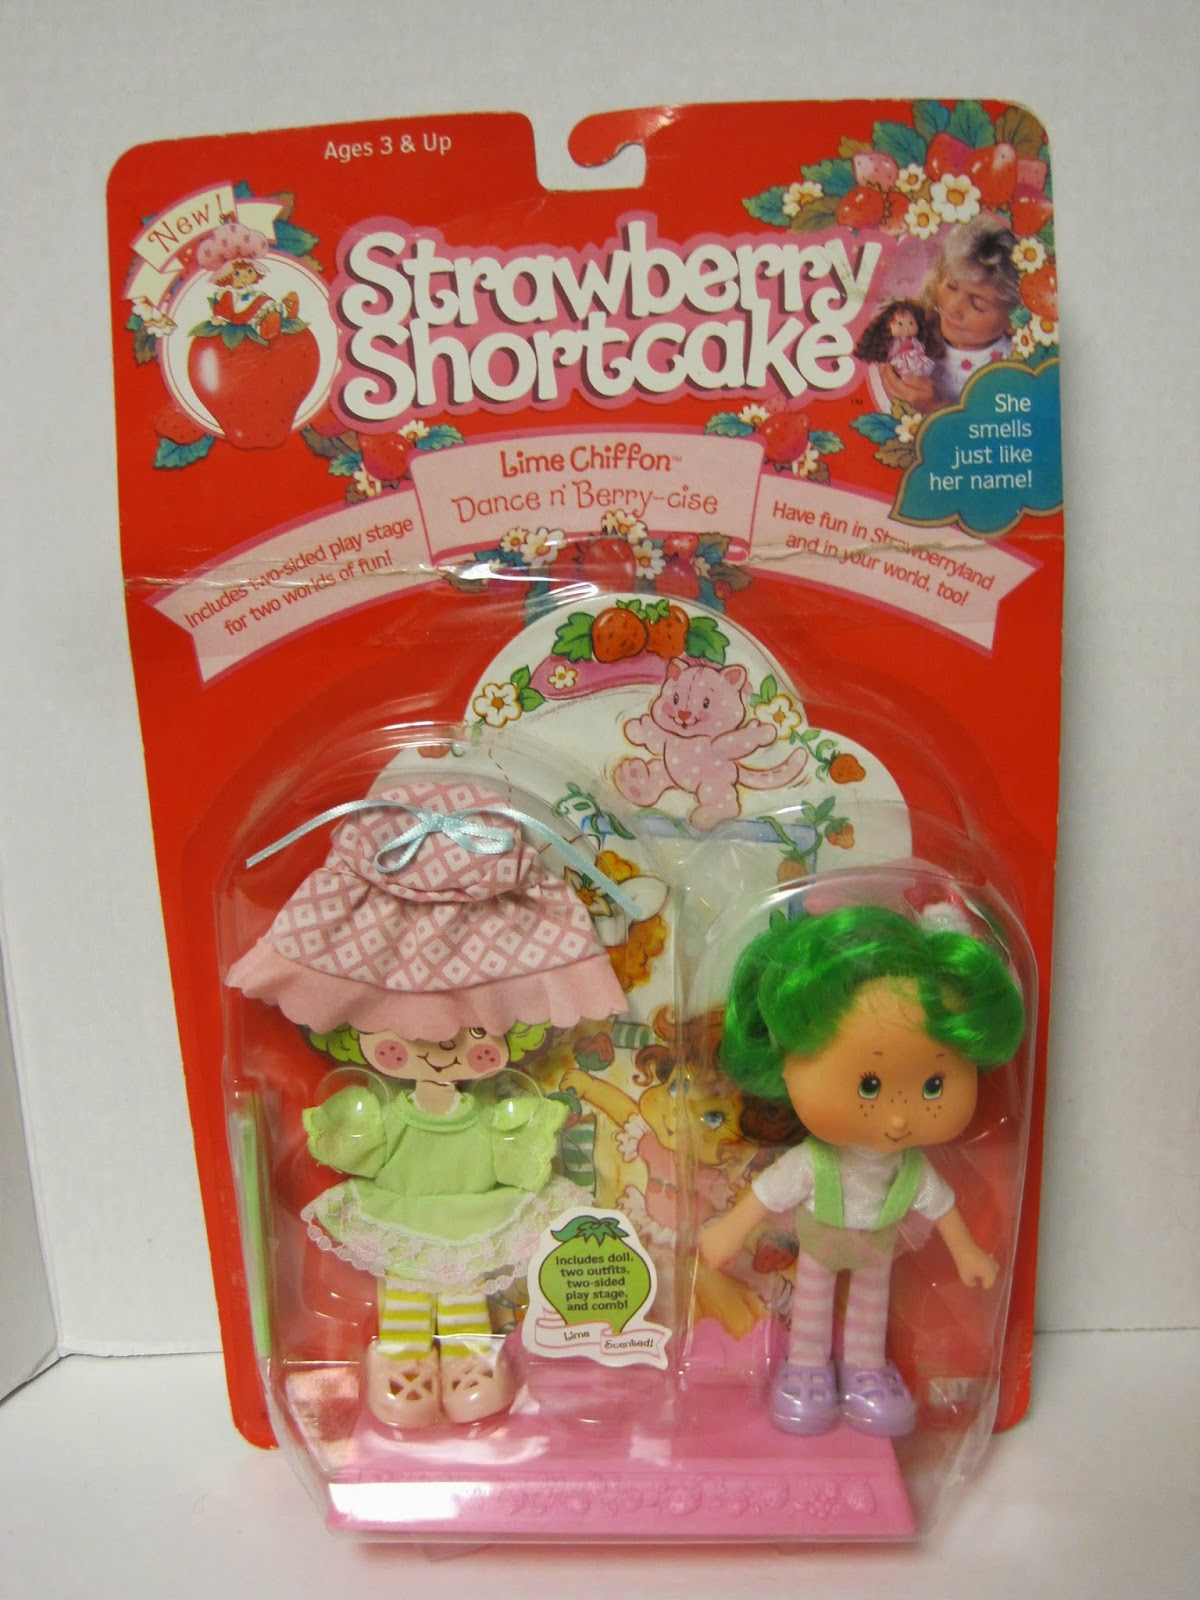 C Strawberry Shortcake Mini Figures Set Vintage SSC 1980s Toys Set of 8 Minis 